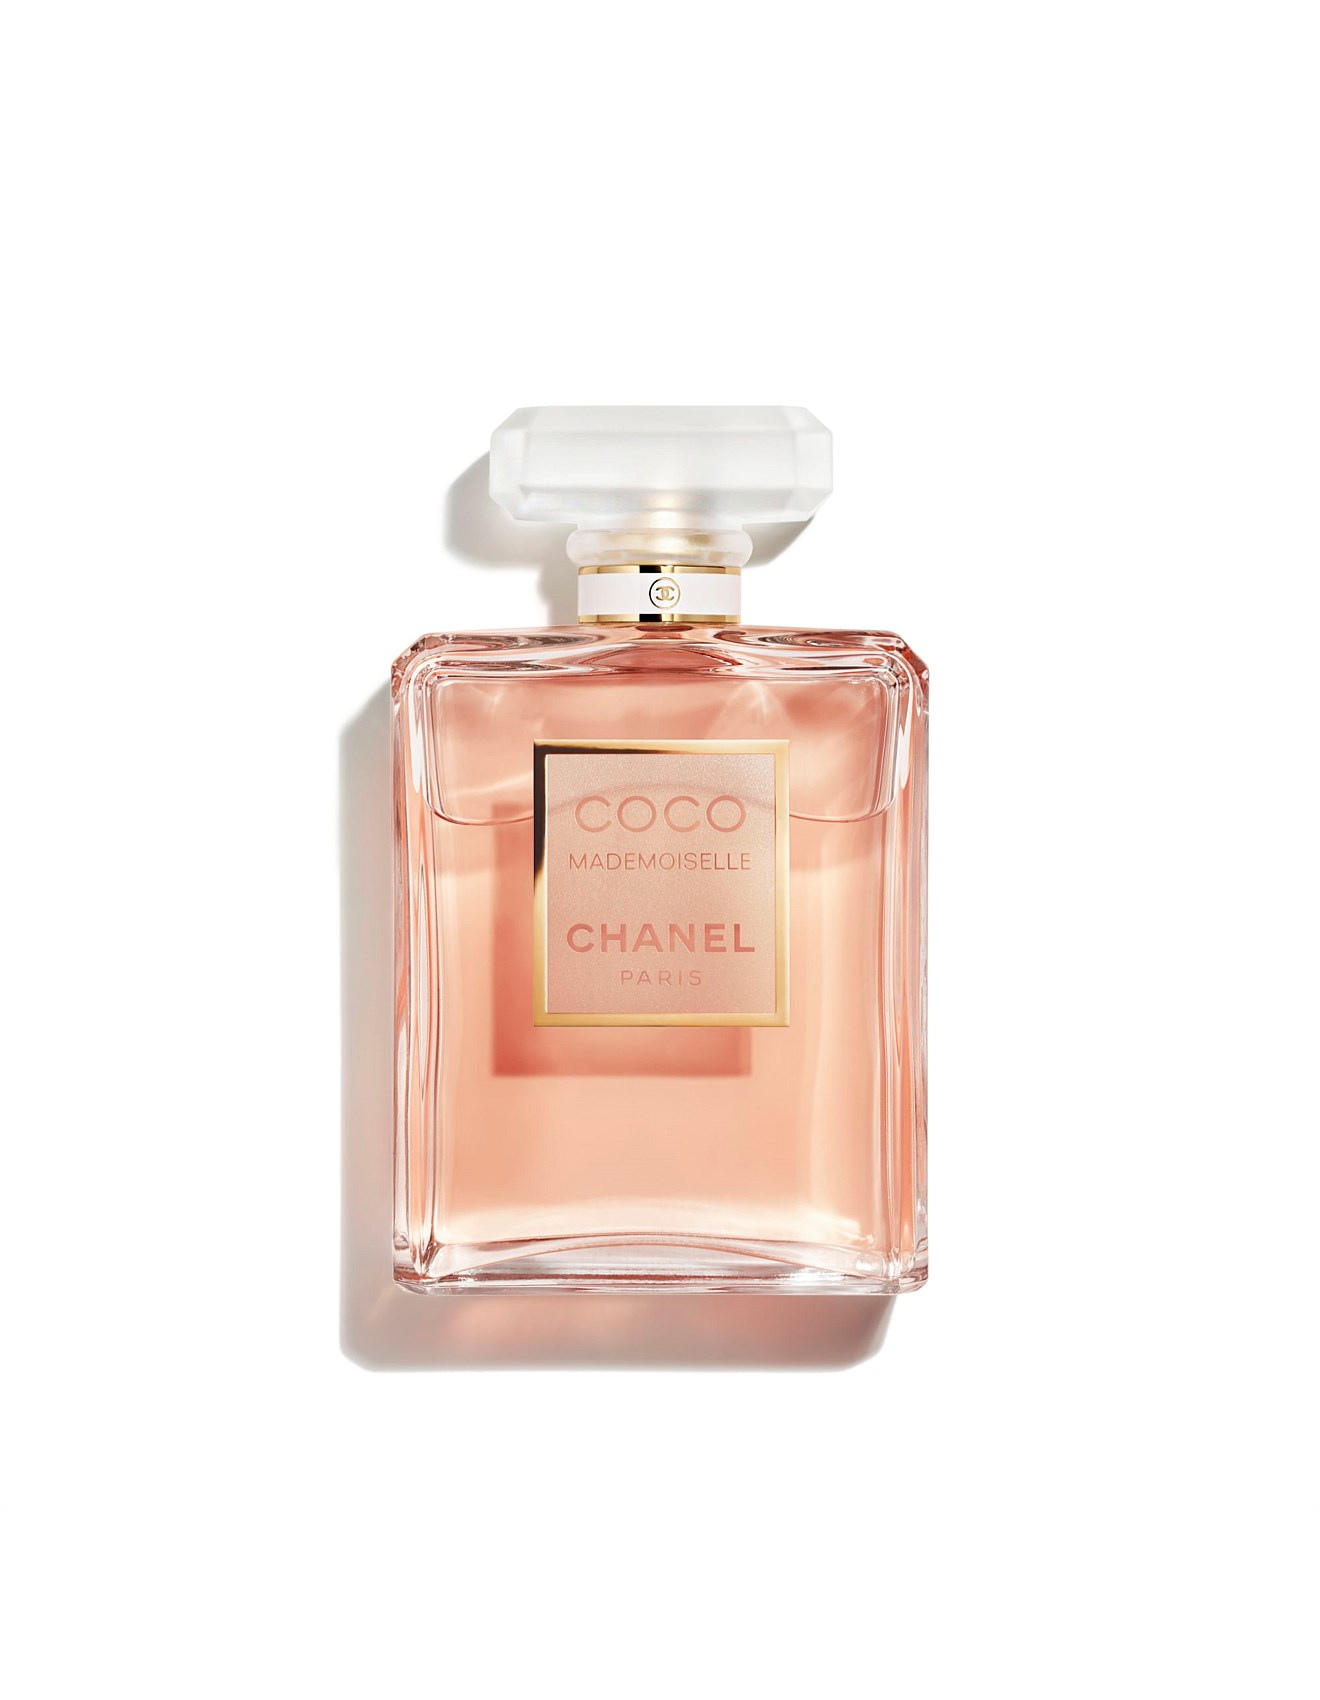 Chanel Coco Mademoiselle eau de parfum 100ml